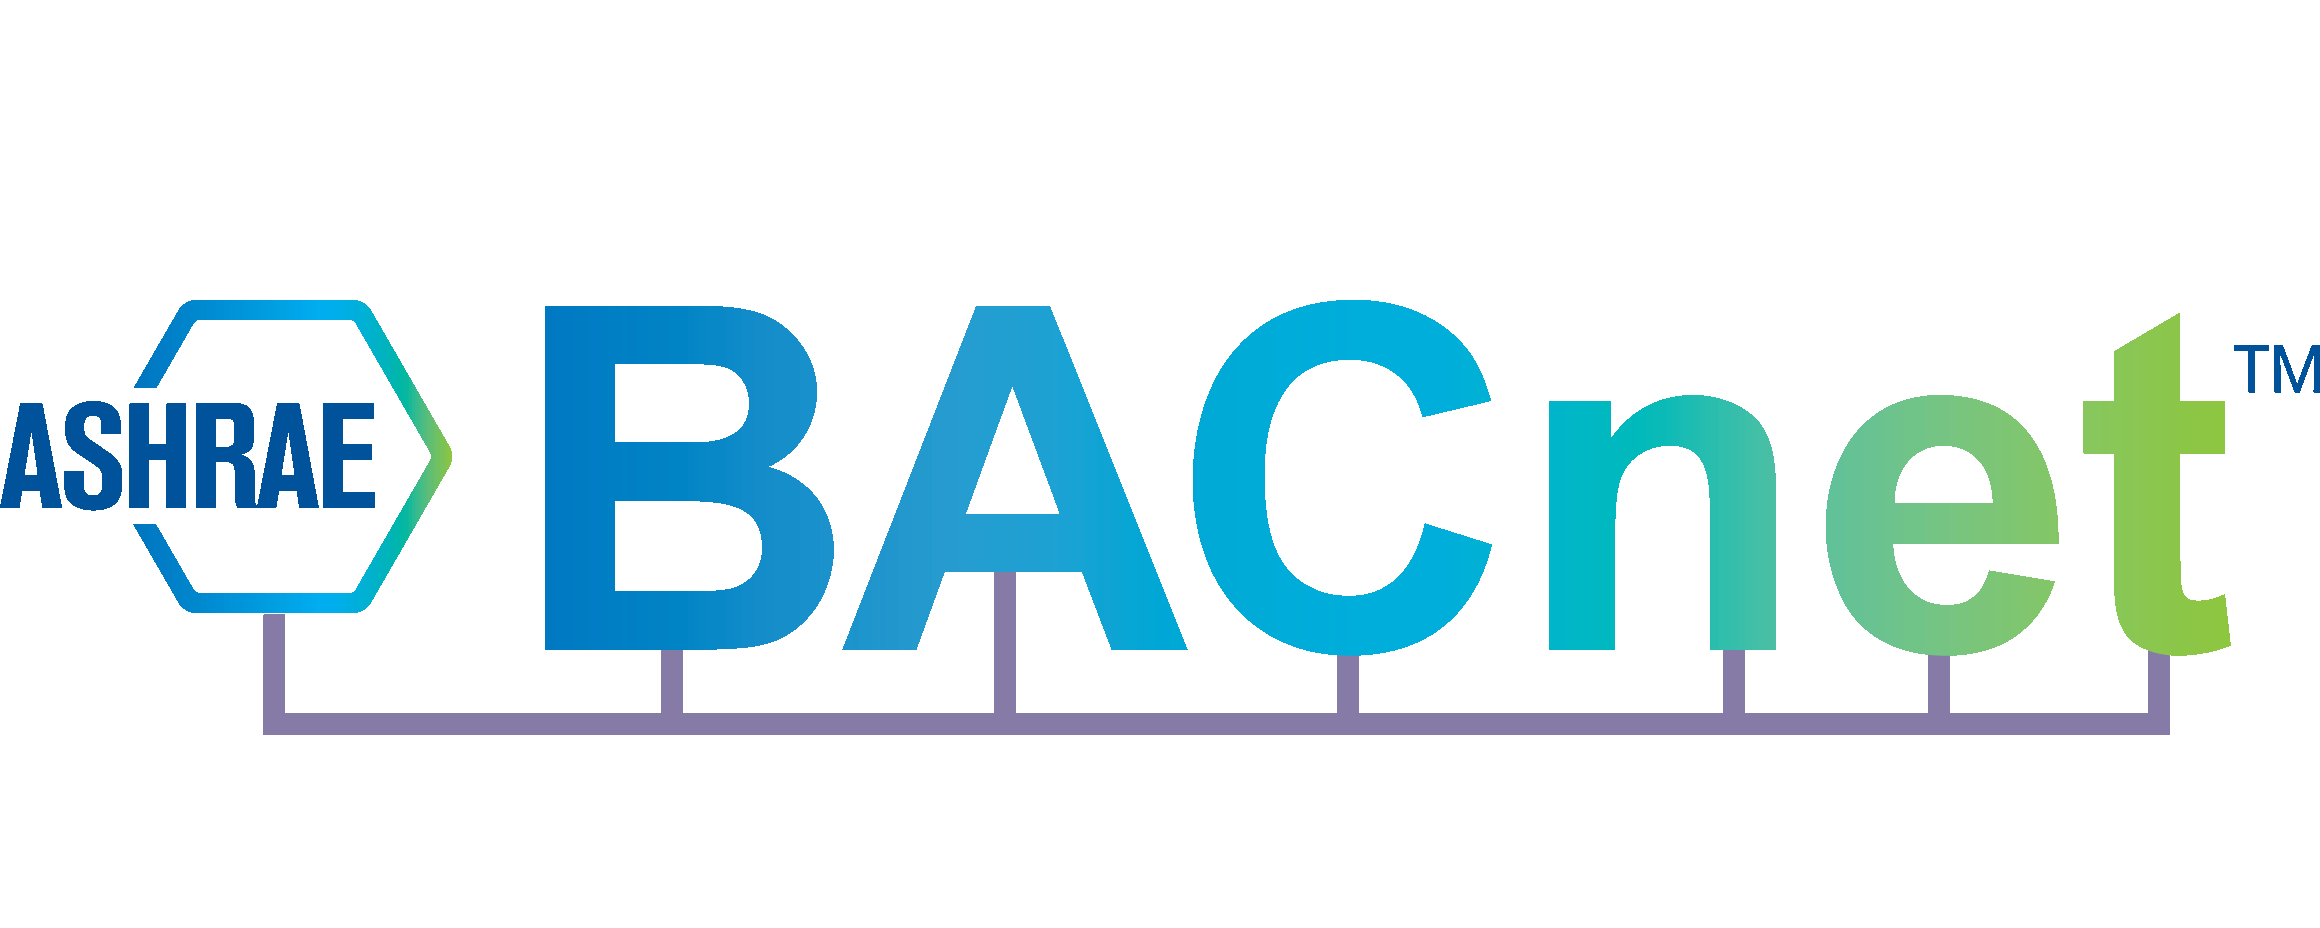 bacnet-logo-new